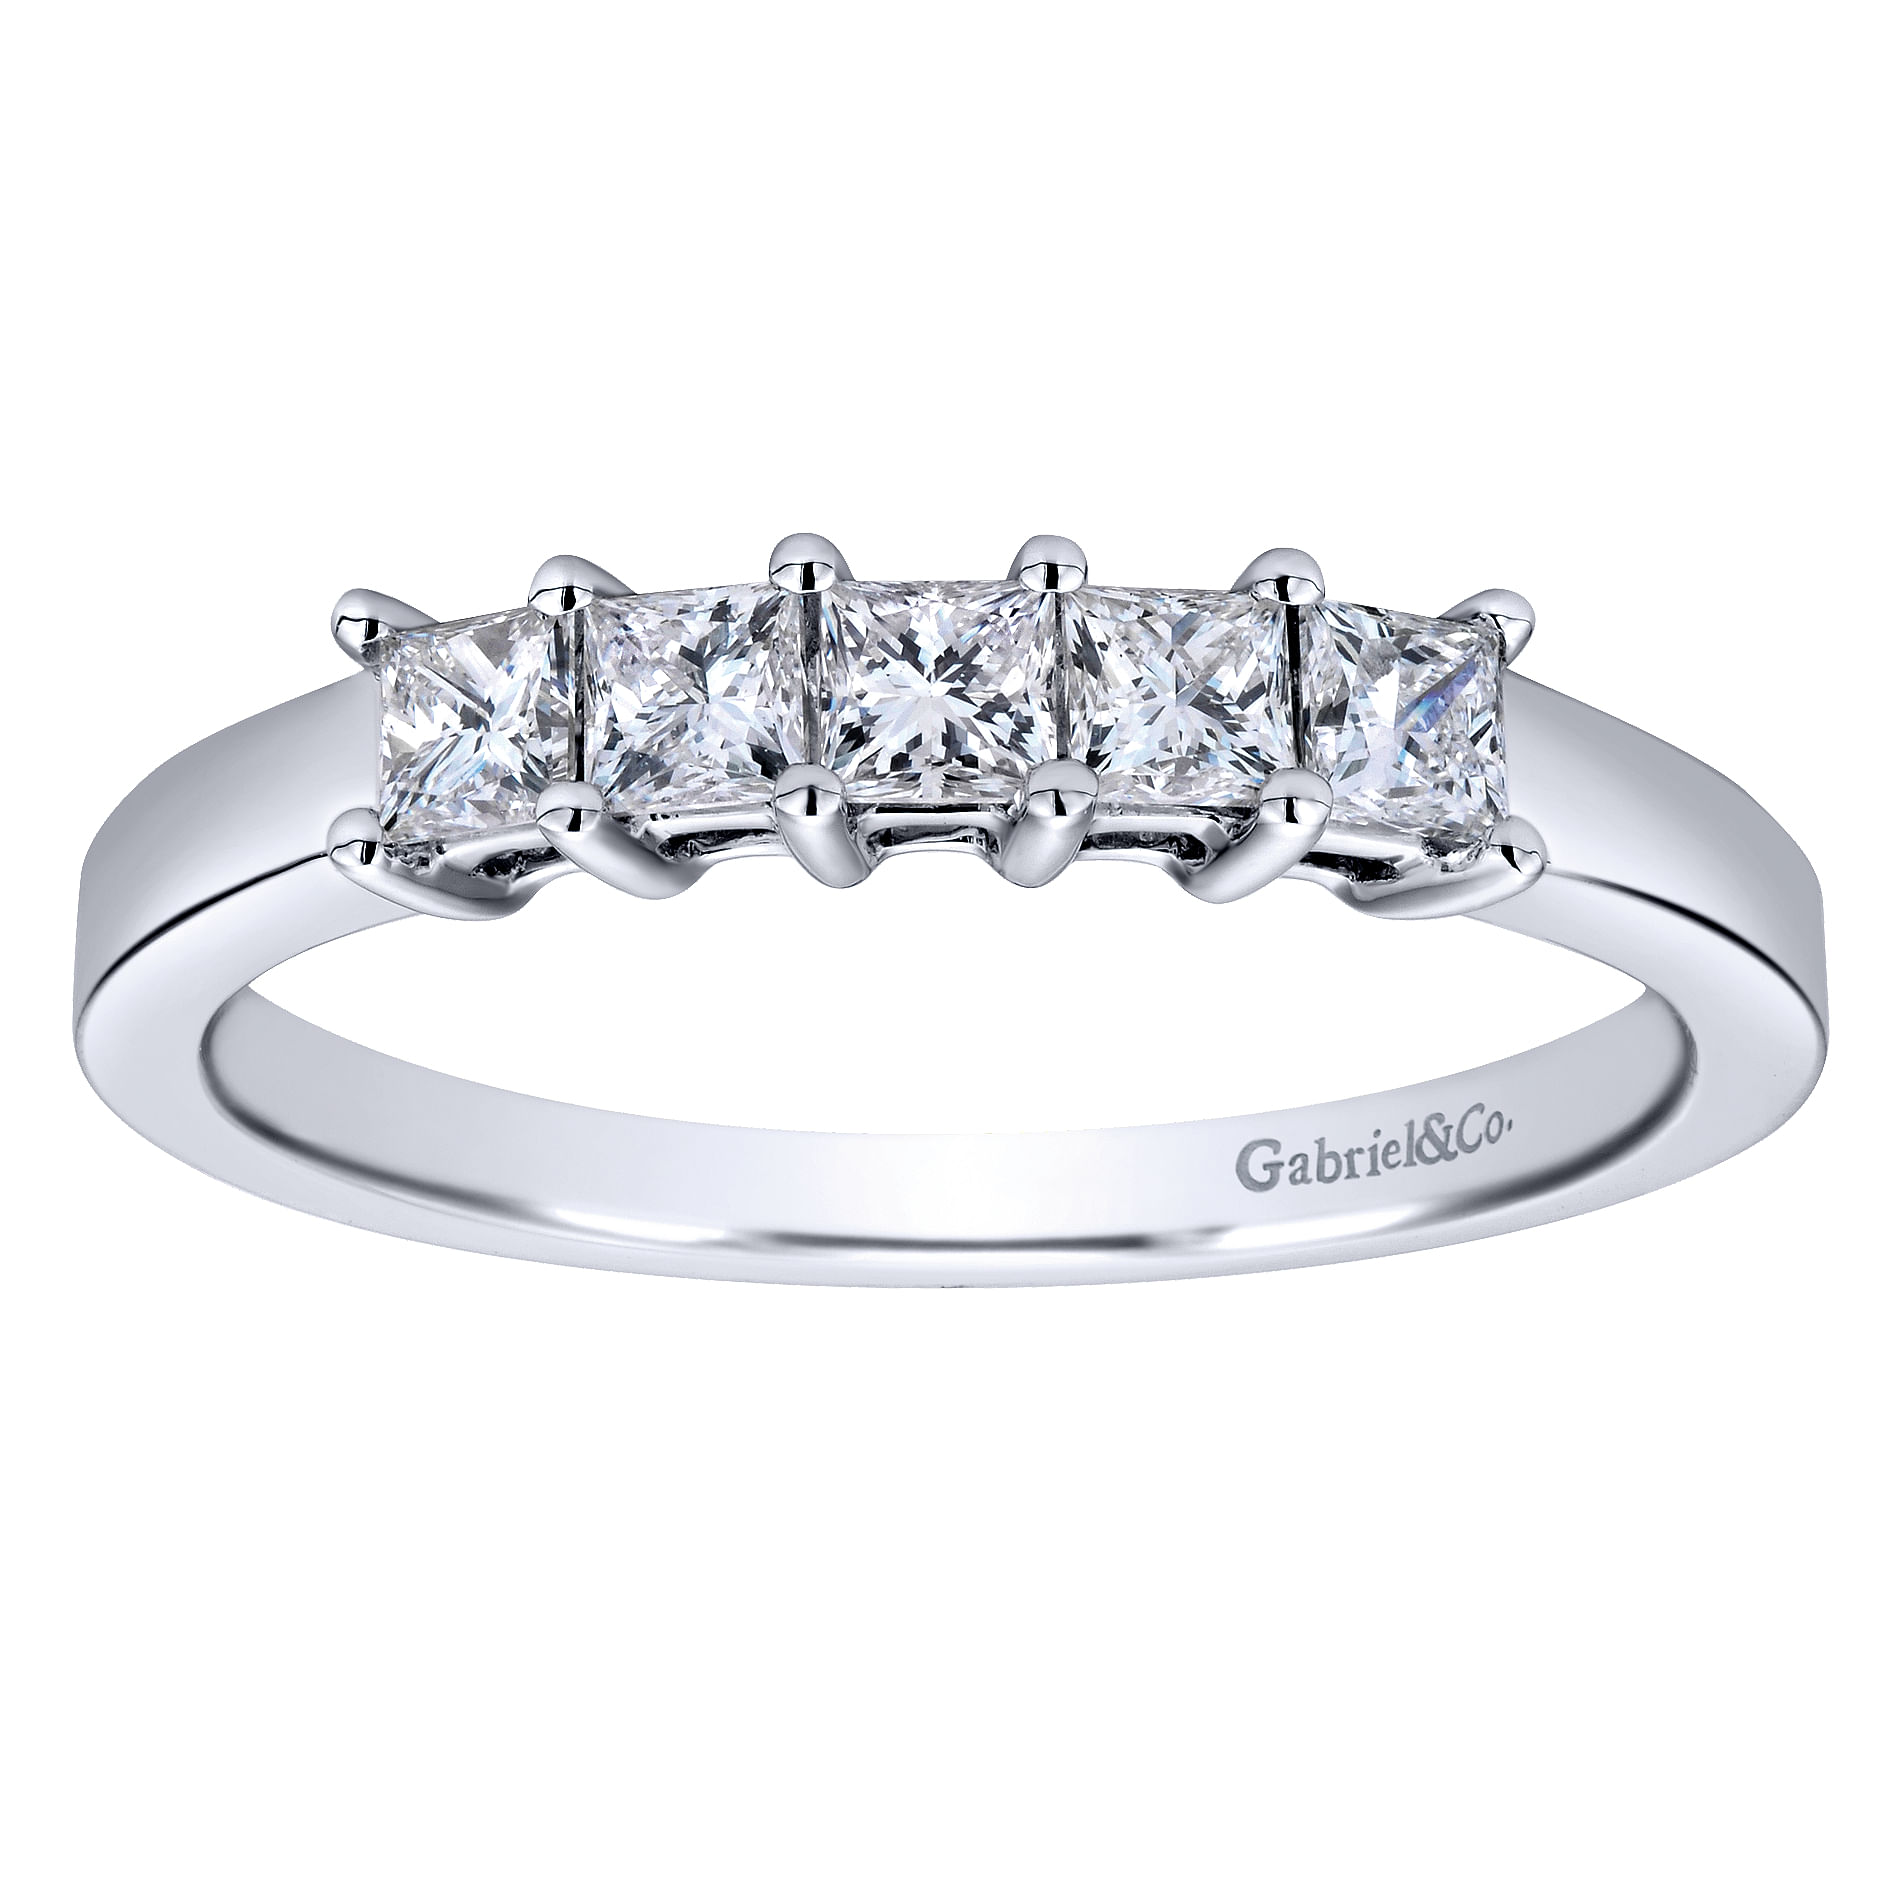 14K White Gold Princess Cut 5 Stone Prong Set Diamond Wedding Band